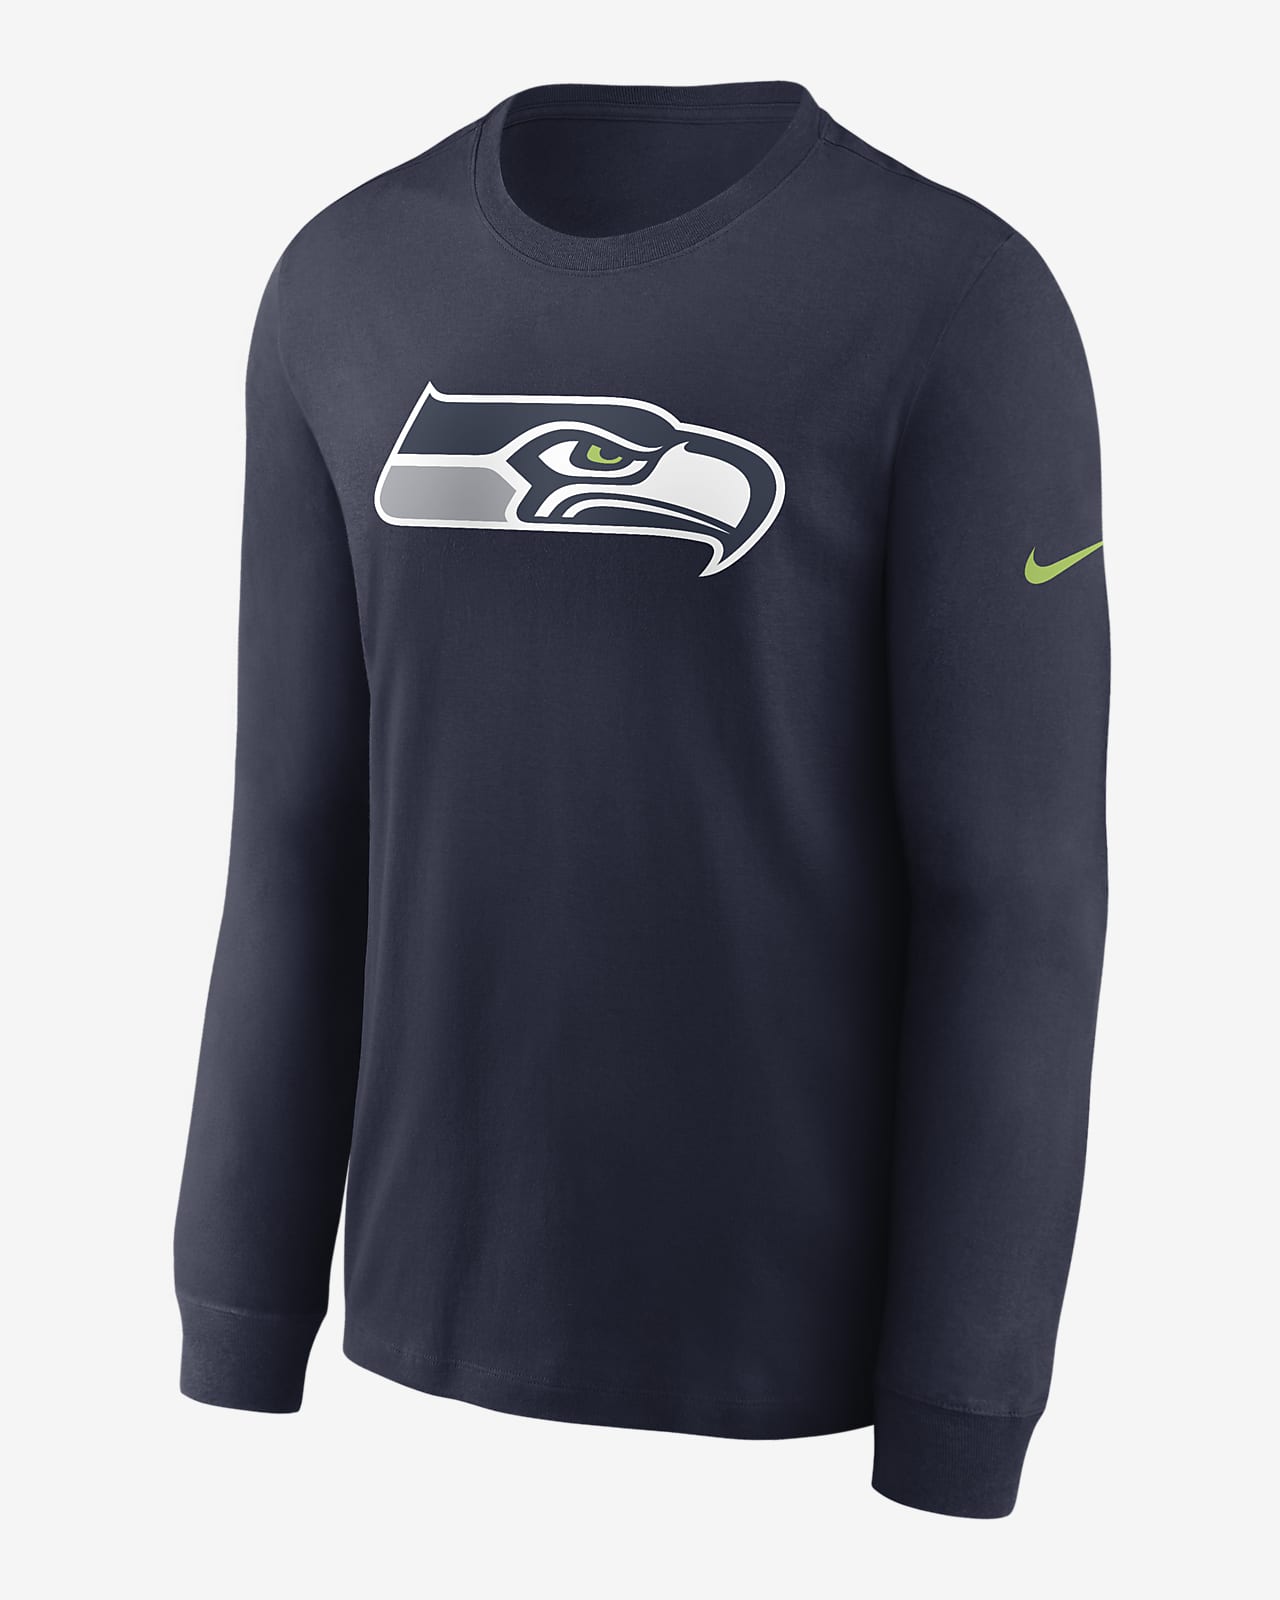 Nike Primary Logo (NFL Seattle Seahawks) Men’s Long-Sleeve T-Shirt